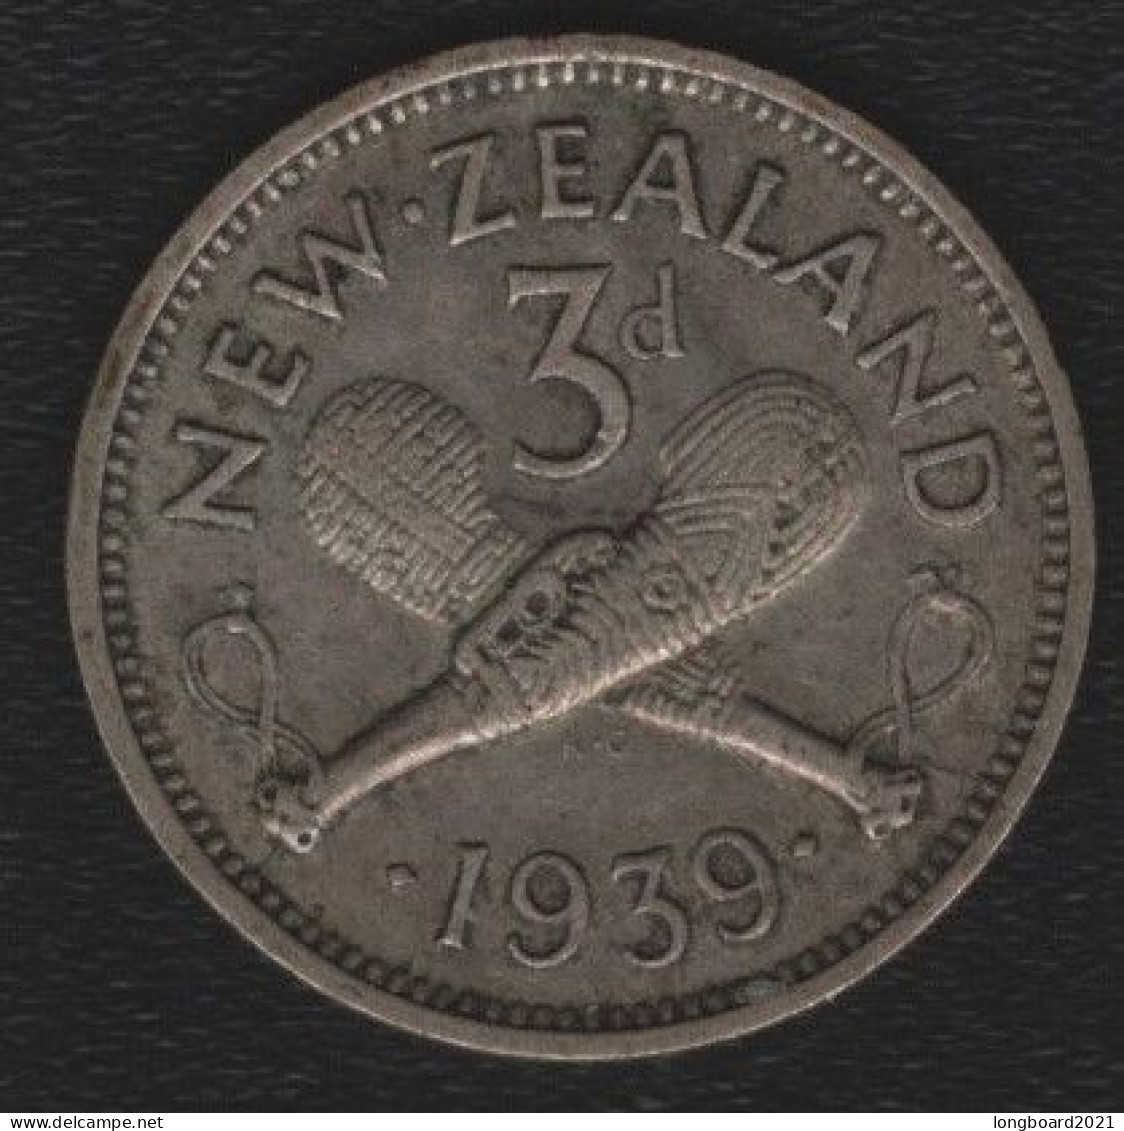 NEW ZEALAND - 3 PENCE 1939 -SILVER- - Neuseeland